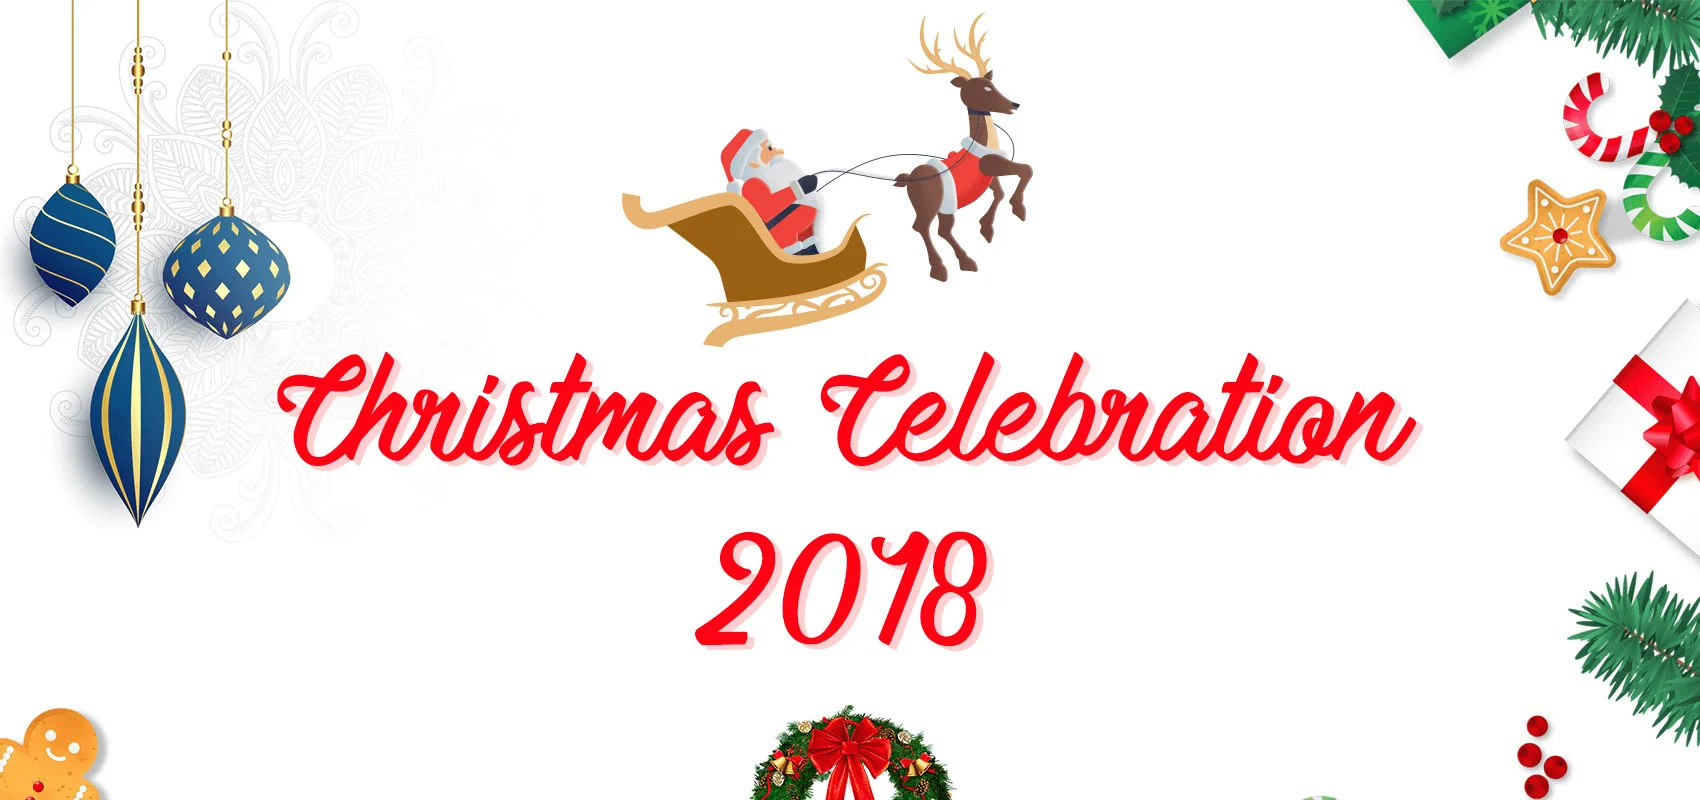 christmas celebrations 2018